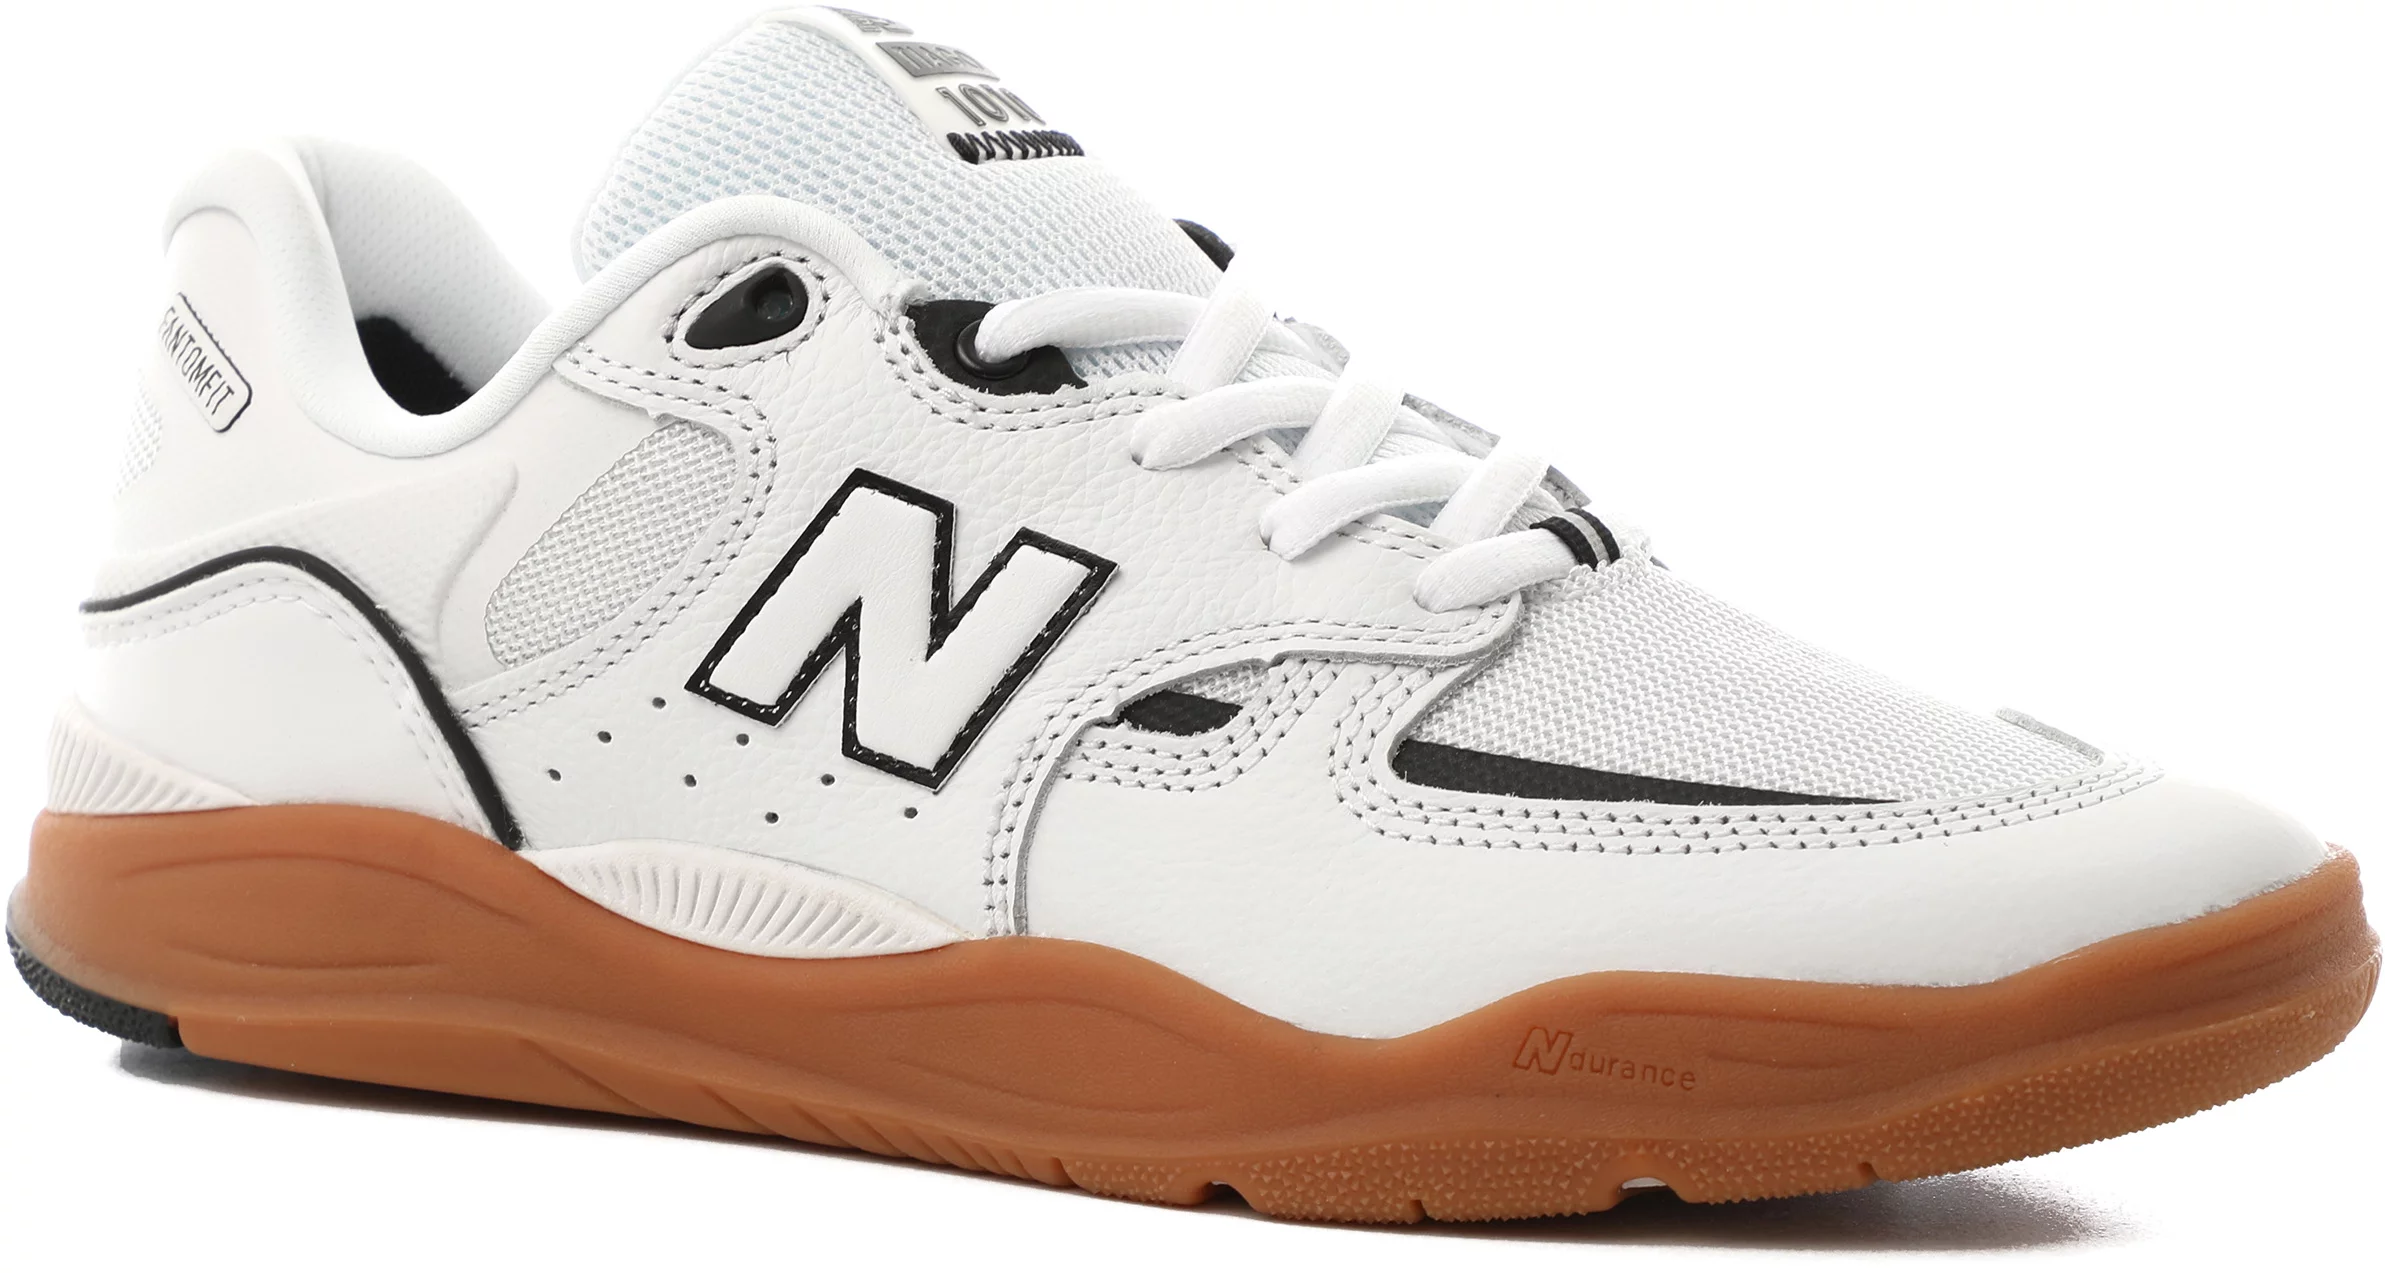 New Balance Numeric 1010 Skate Shoes - white/gum - Free Shipping ... حليب نادك قليل الدسم